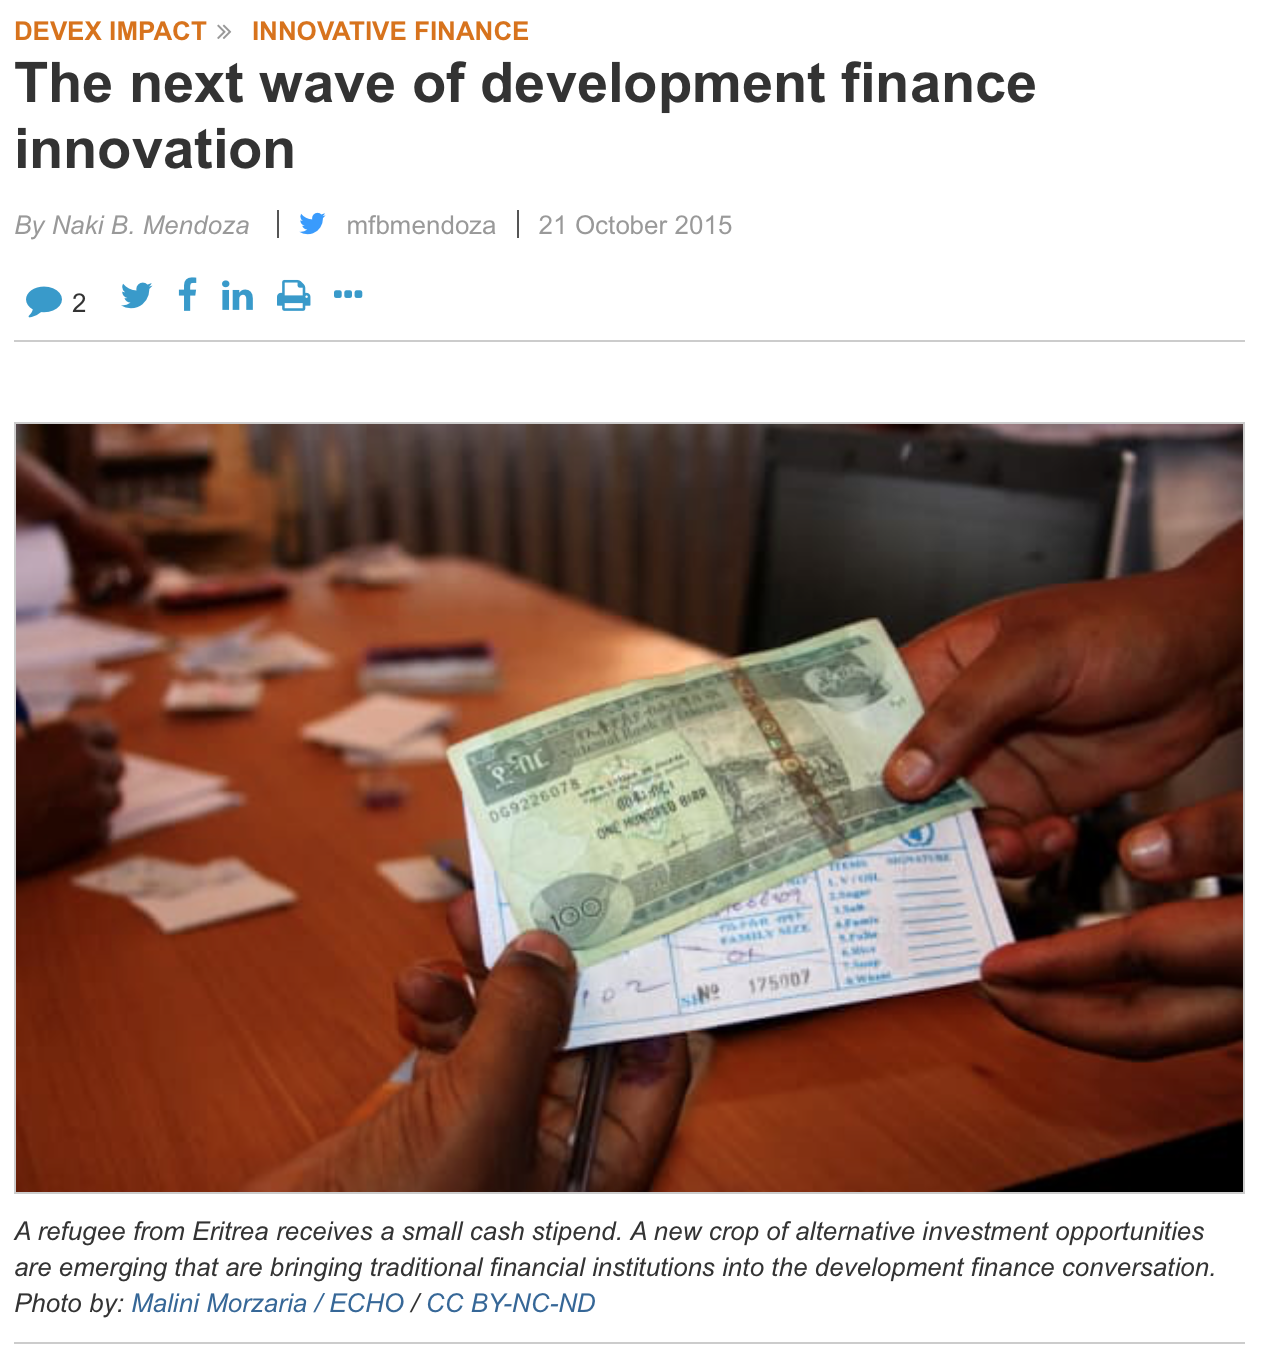 The next wave of development finance innovation